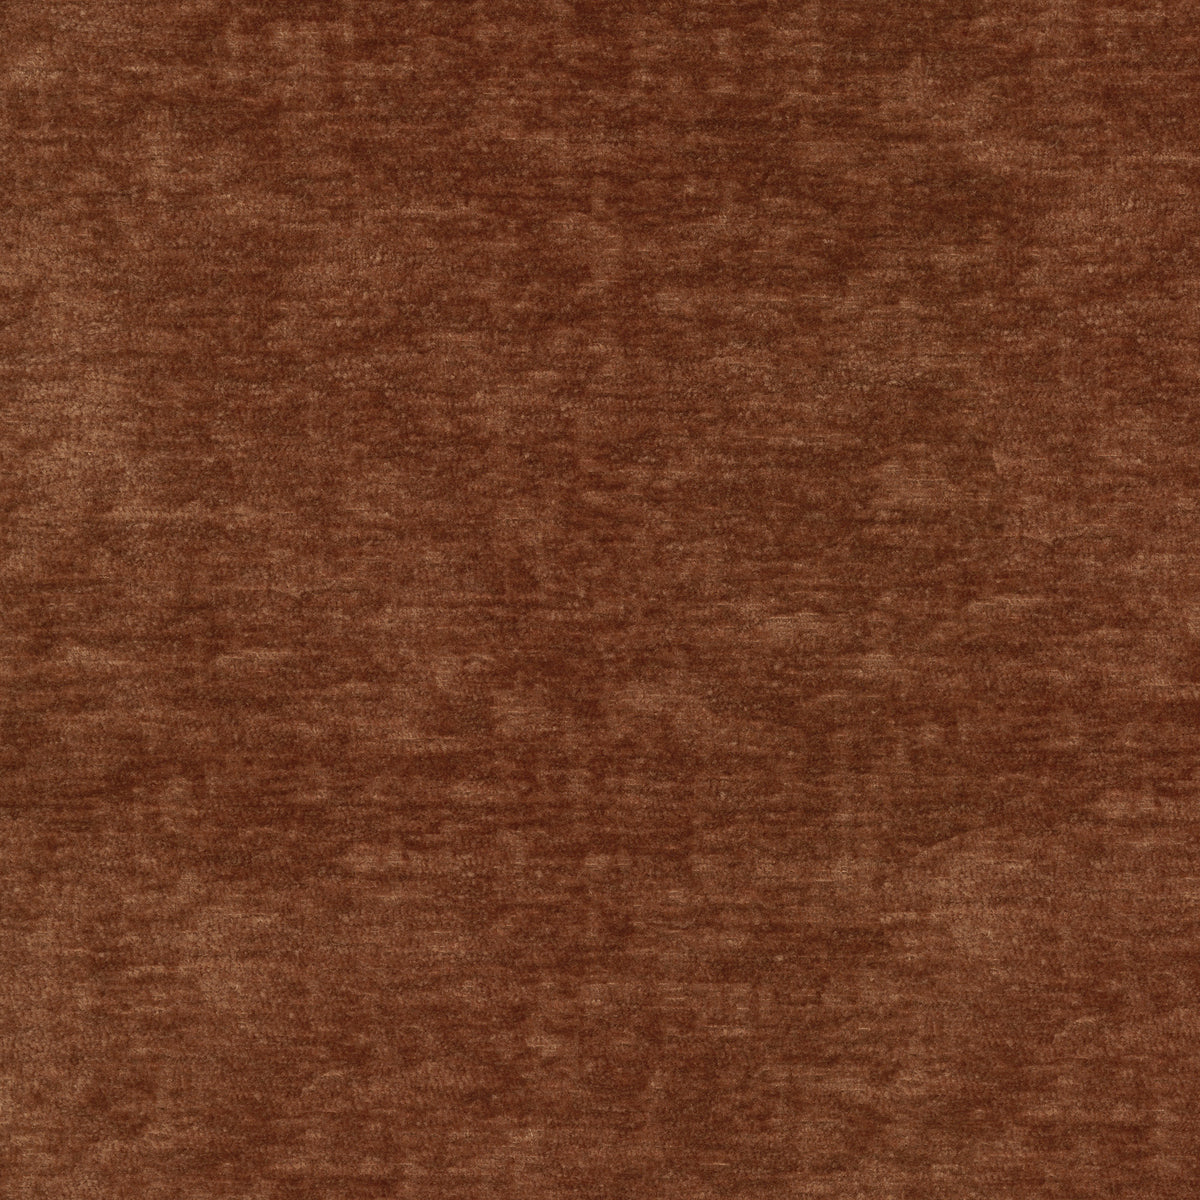 P/K Lifestyles Lushscape - Terracotta 412294 Upholstery Fabric